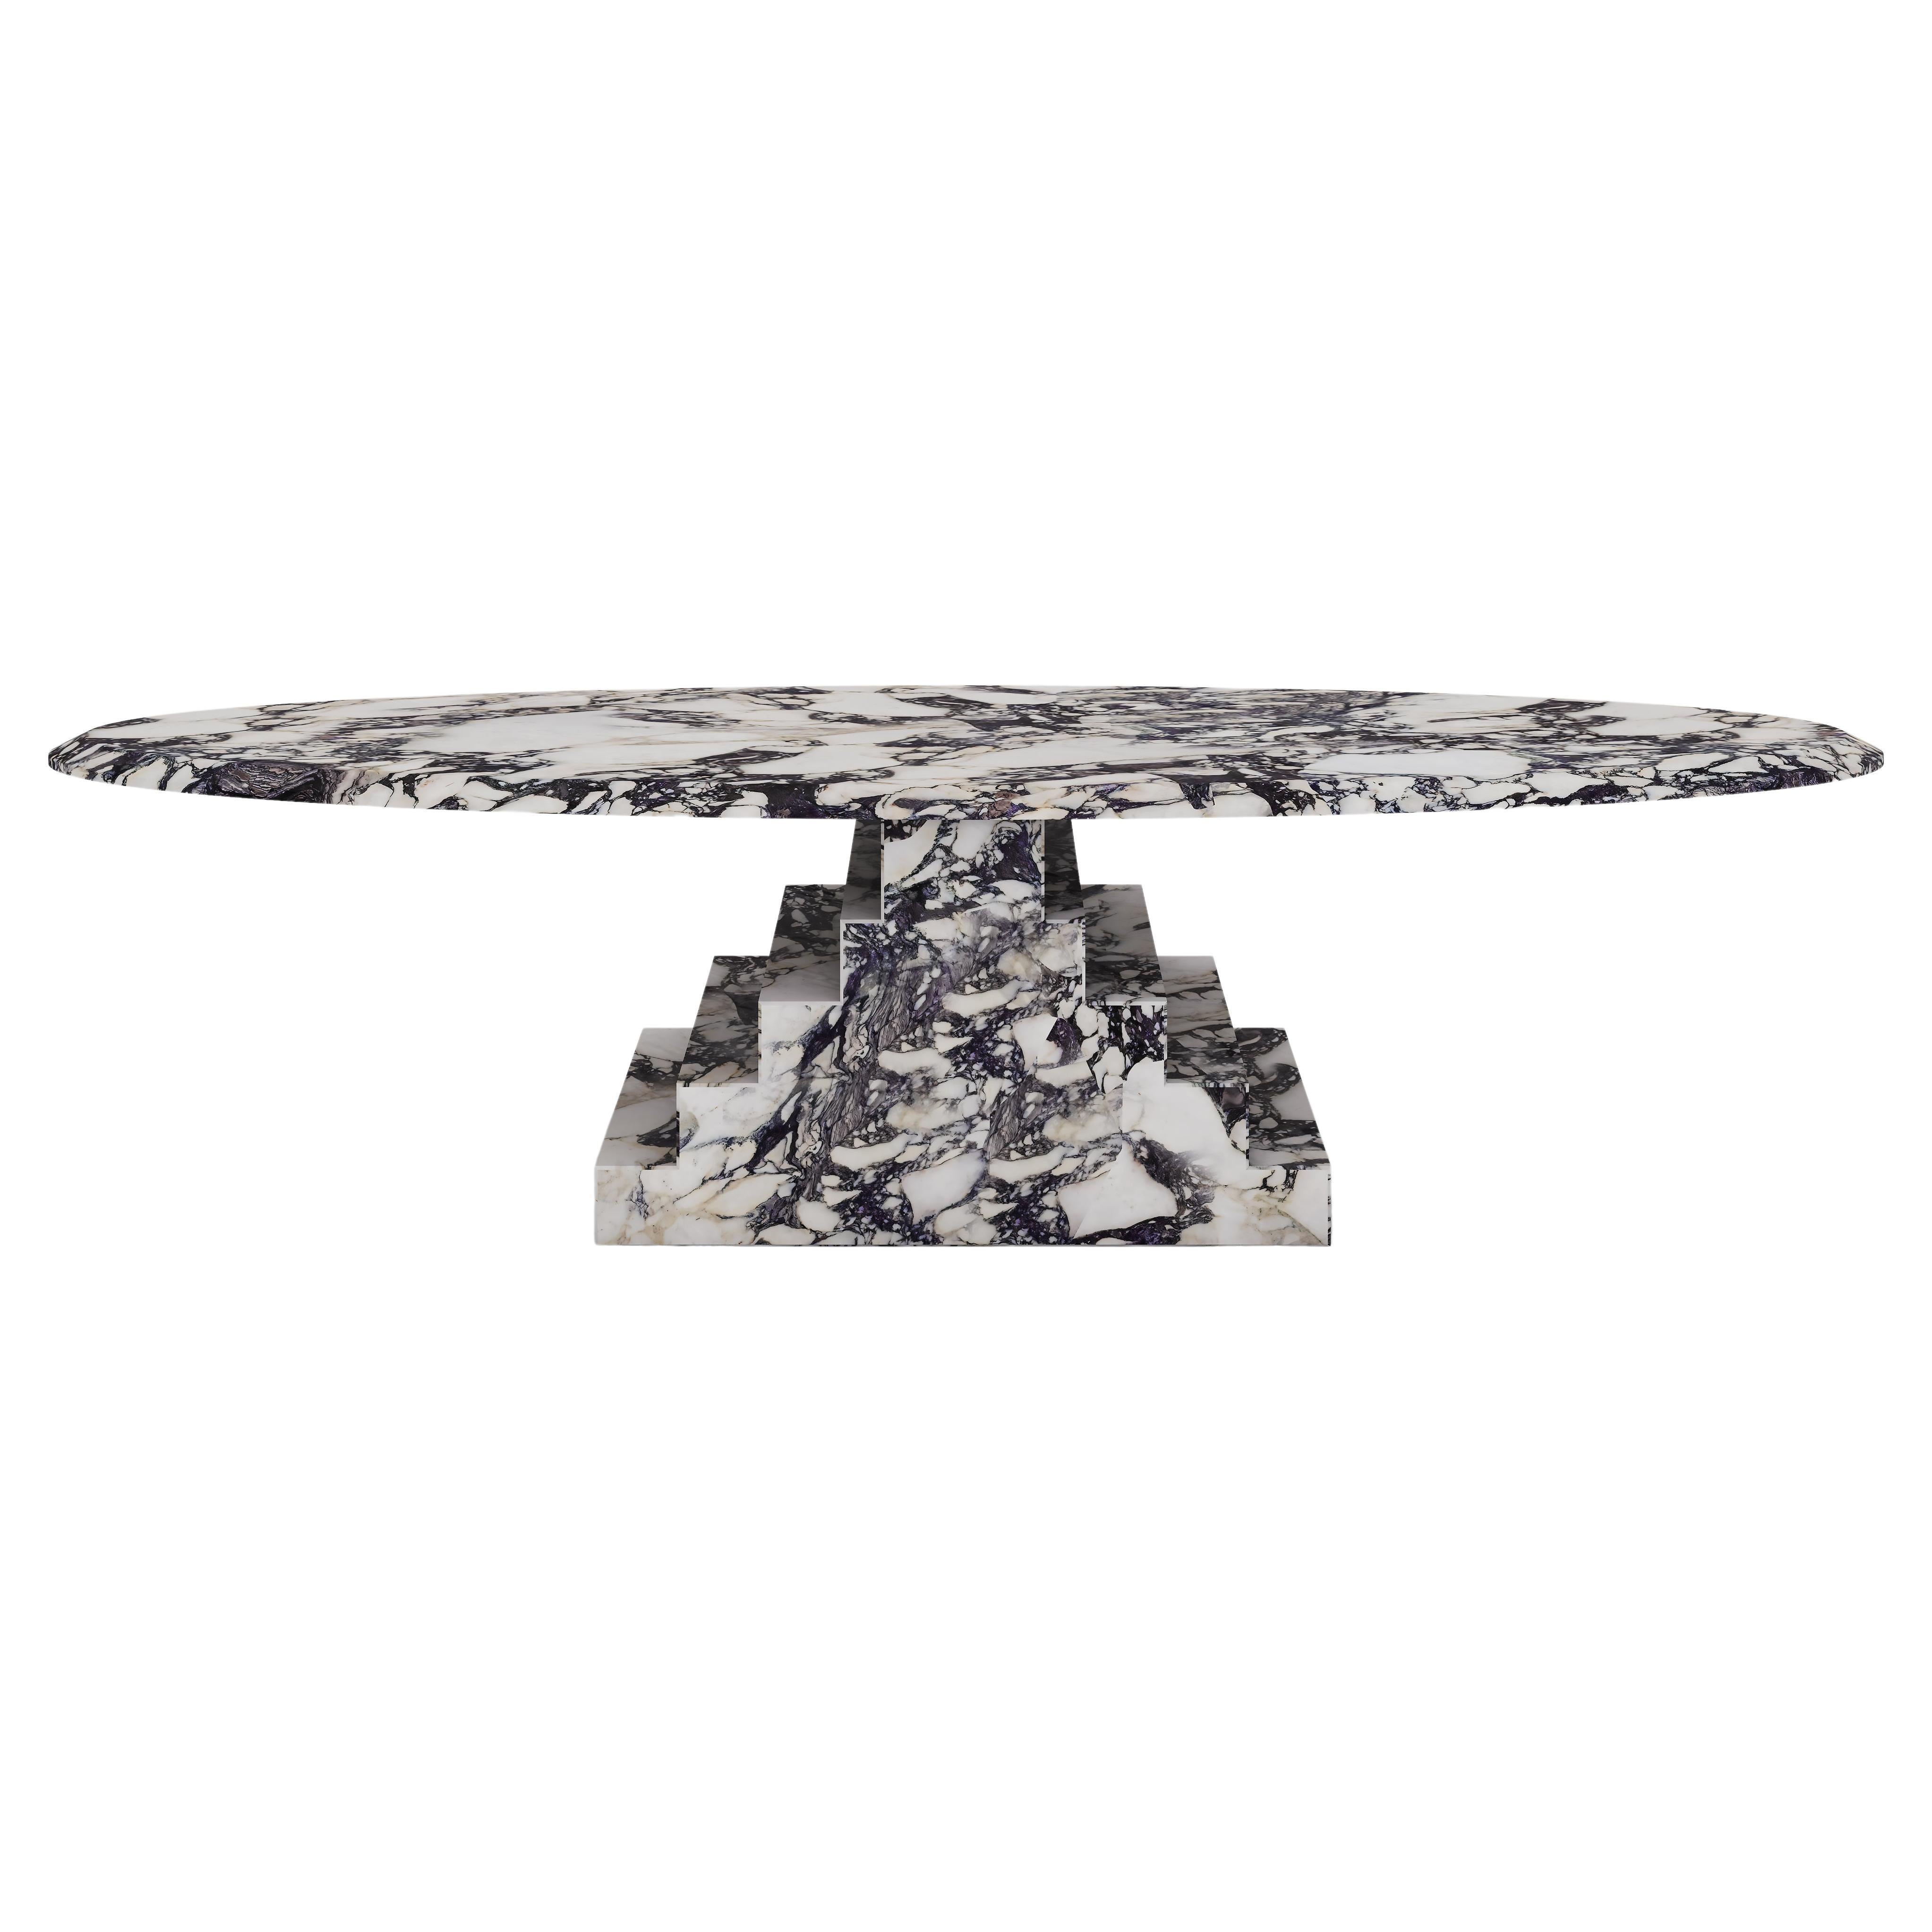  NORDST NIKO Coffee Table, Italian Calacatta Marble, Danish Modern Design, New For Sale